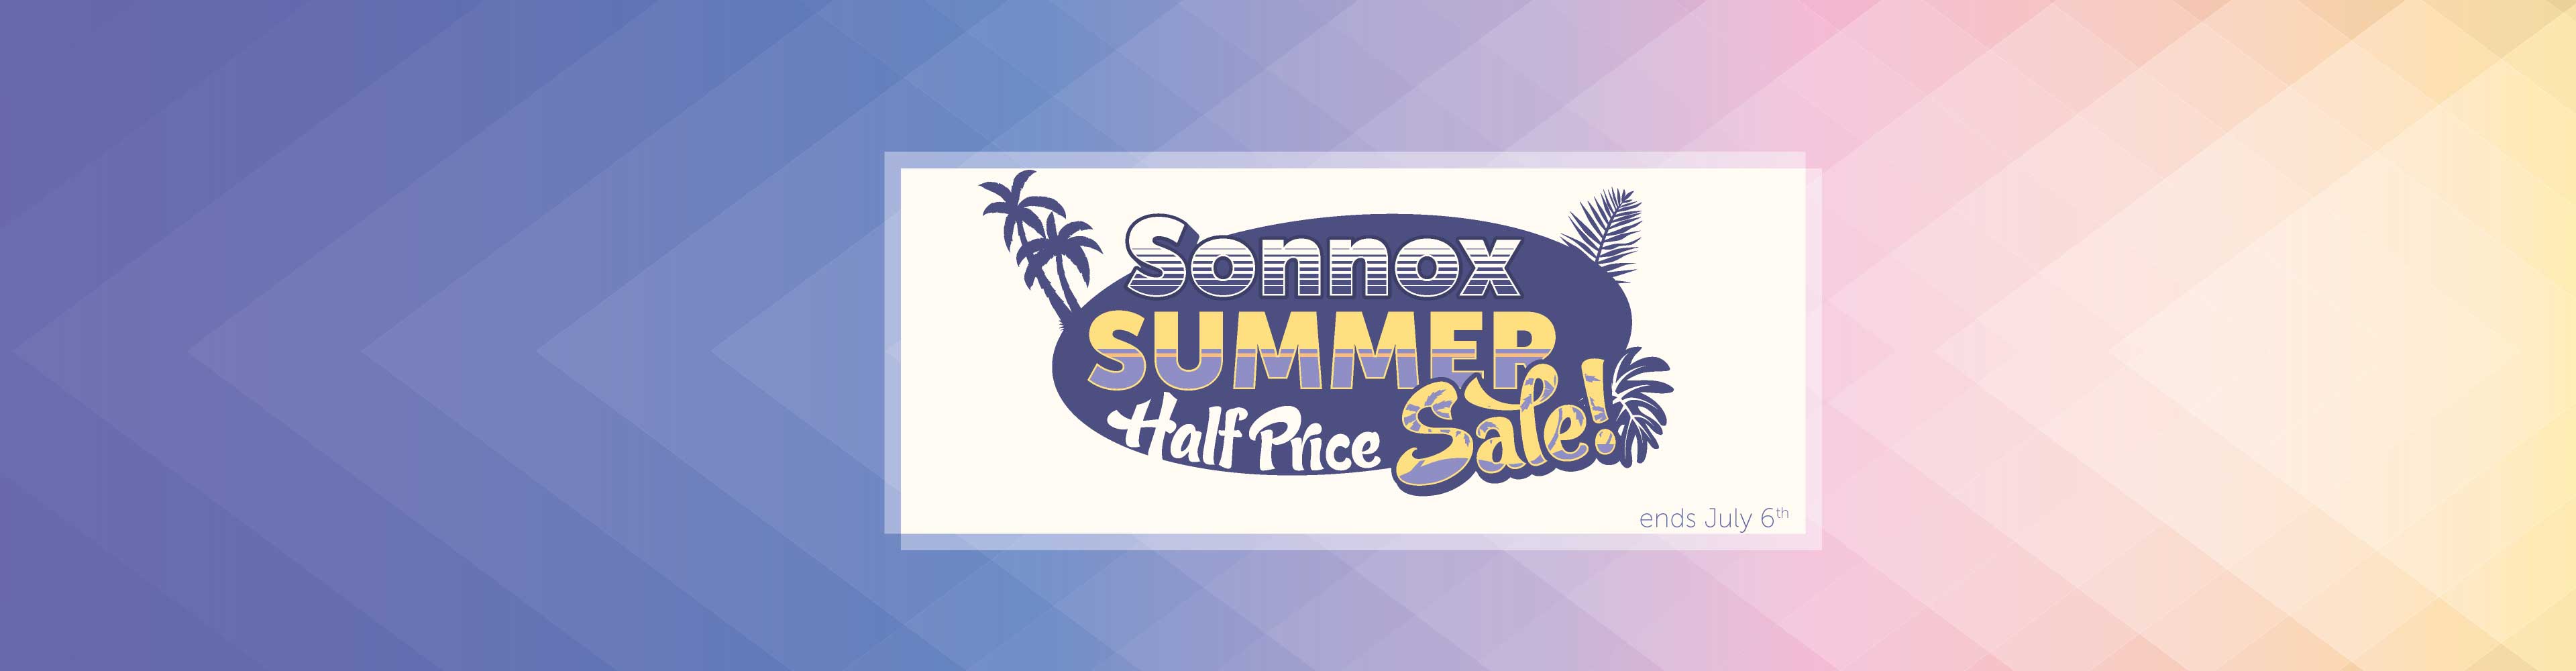 summer-sale-2020-home-banner.jpg